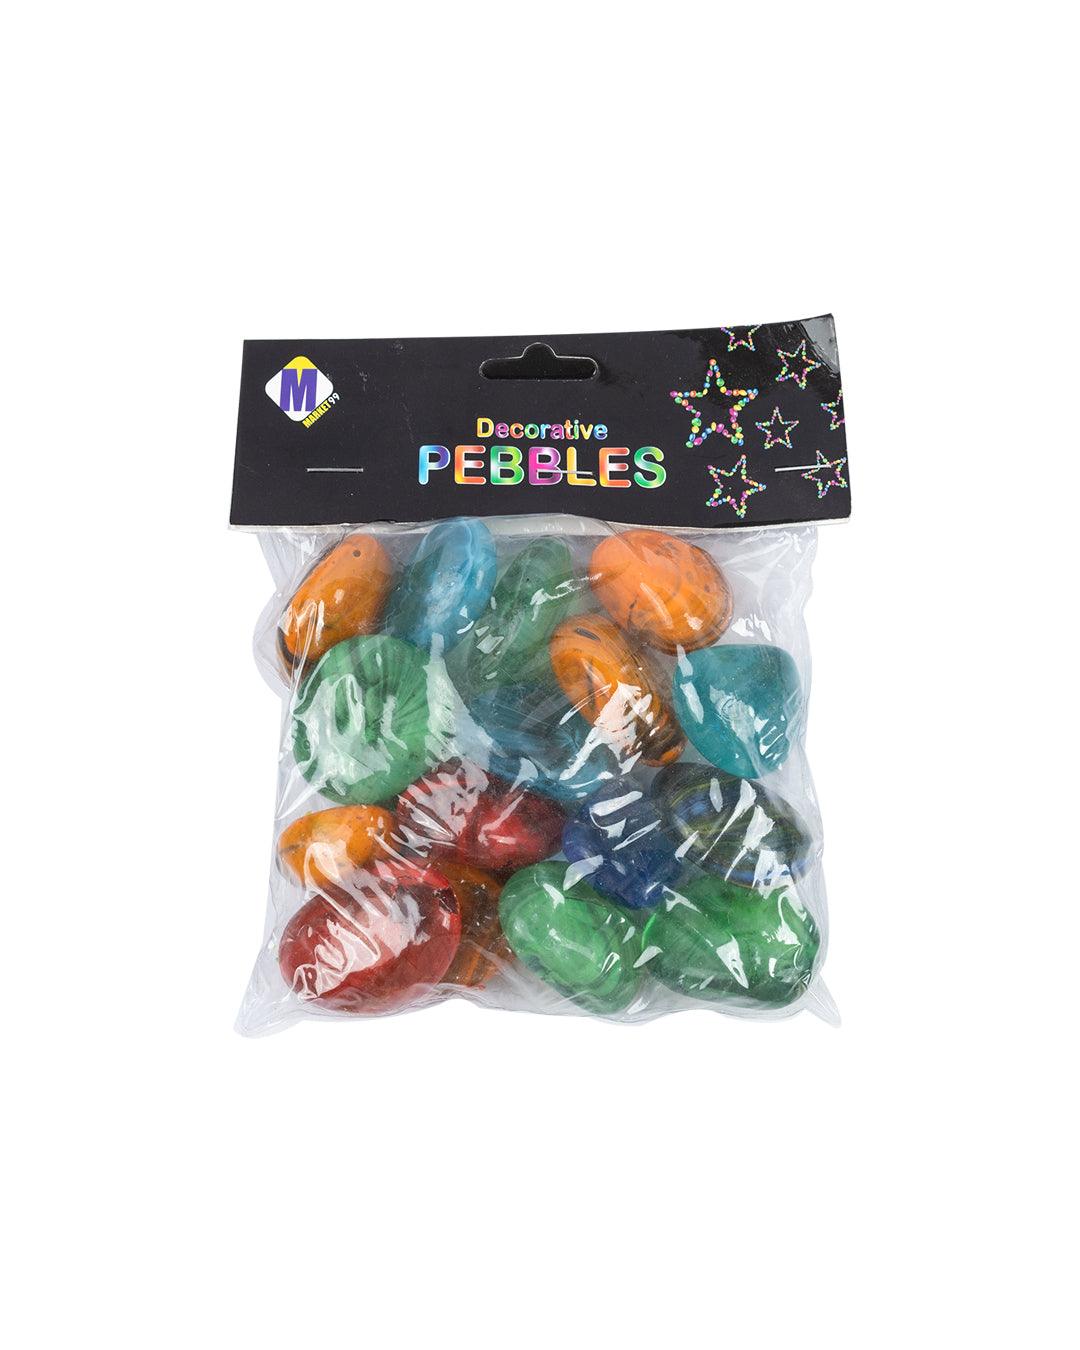 Decorative Pebbles, Multicolour, Glass - MARKET 99